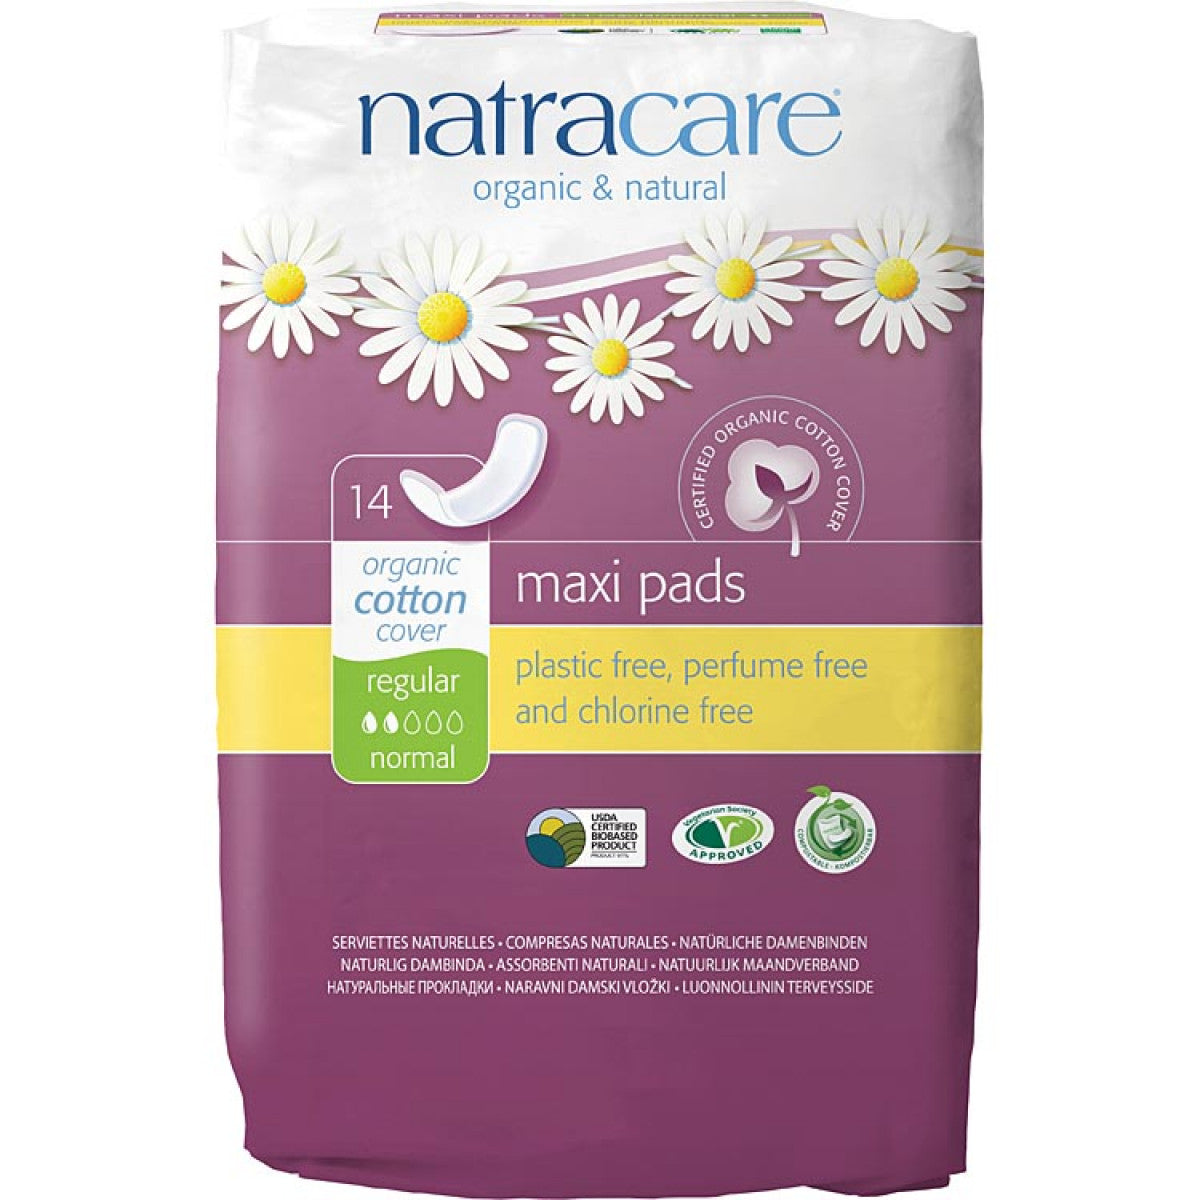 Natracare, Organic Cotton Cover, Maxi Pads, Regular, 14 Pads